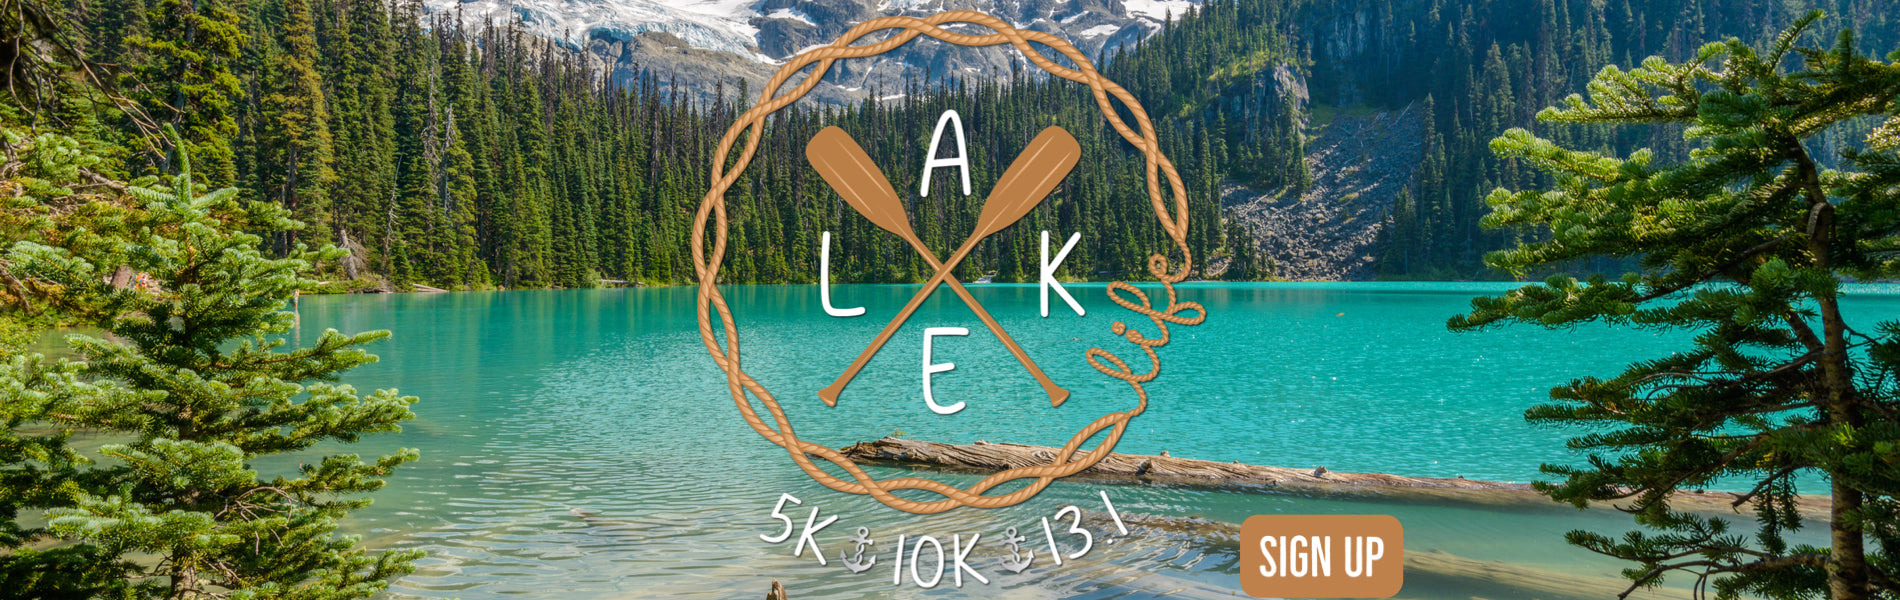 lake life 5k 10k 13.1 medal dash virtual run walk